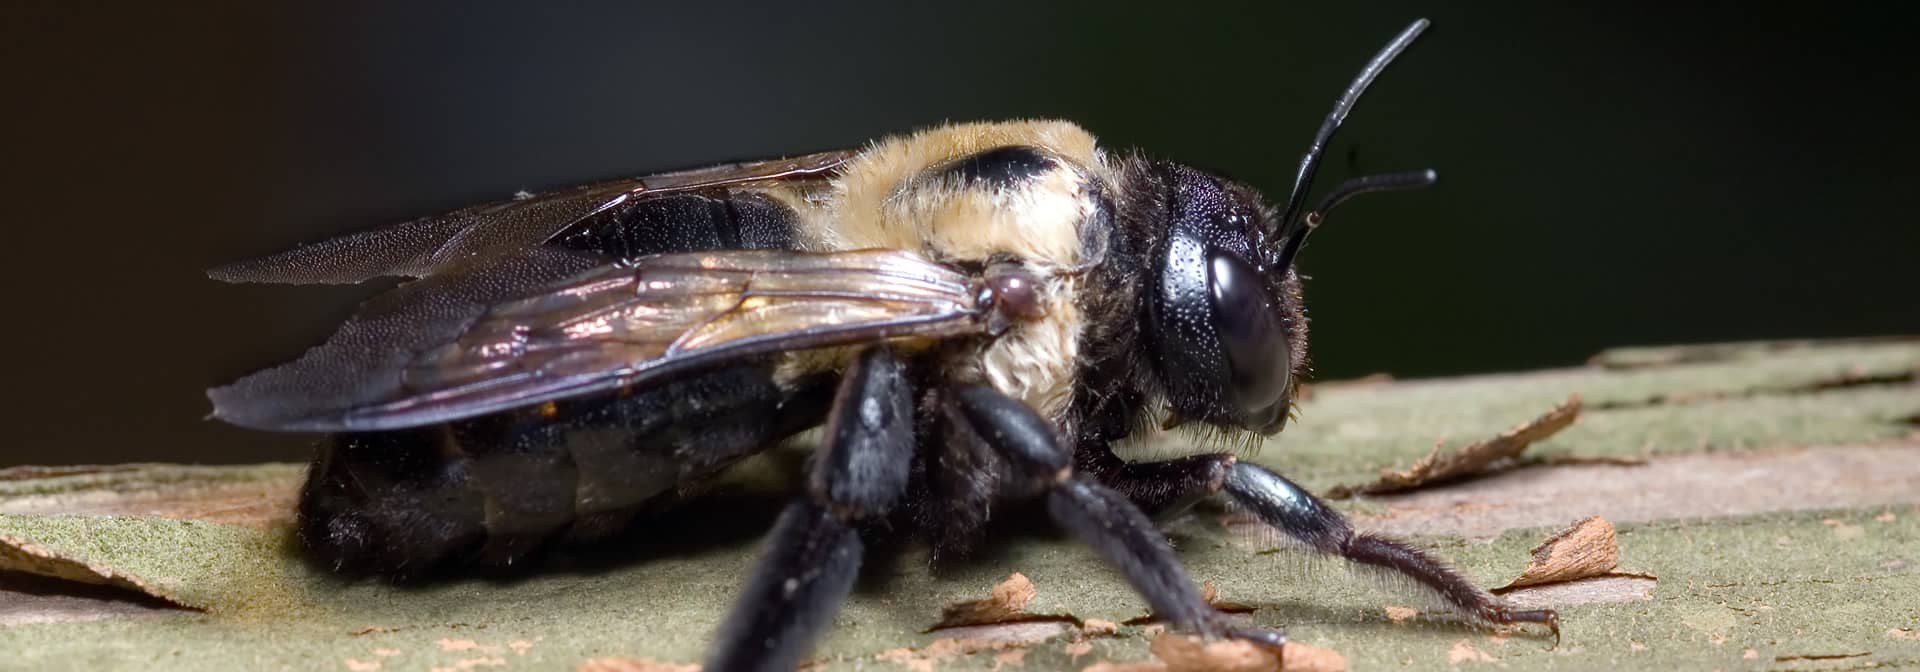 Knock'em Out Pest Control - Michigan Carpenter Bee Control